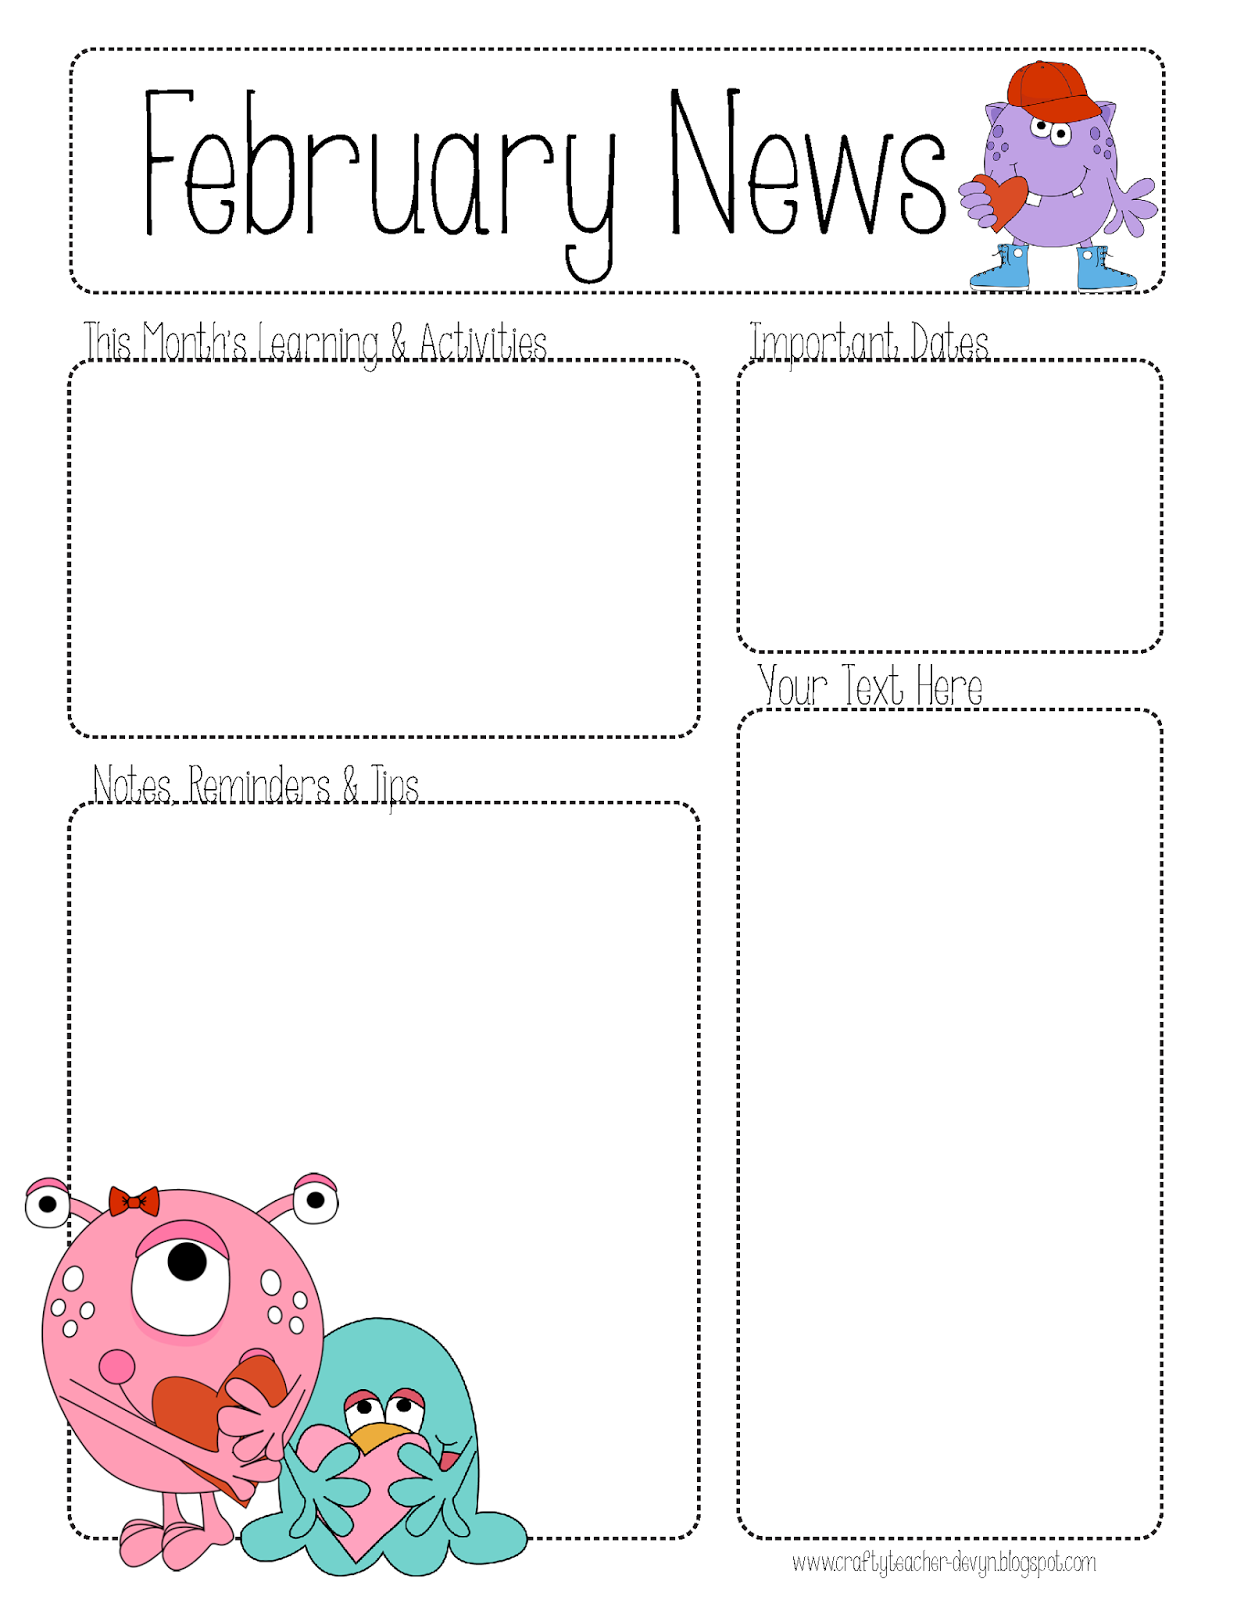 2-february-newsletters-the-crafty-teacher